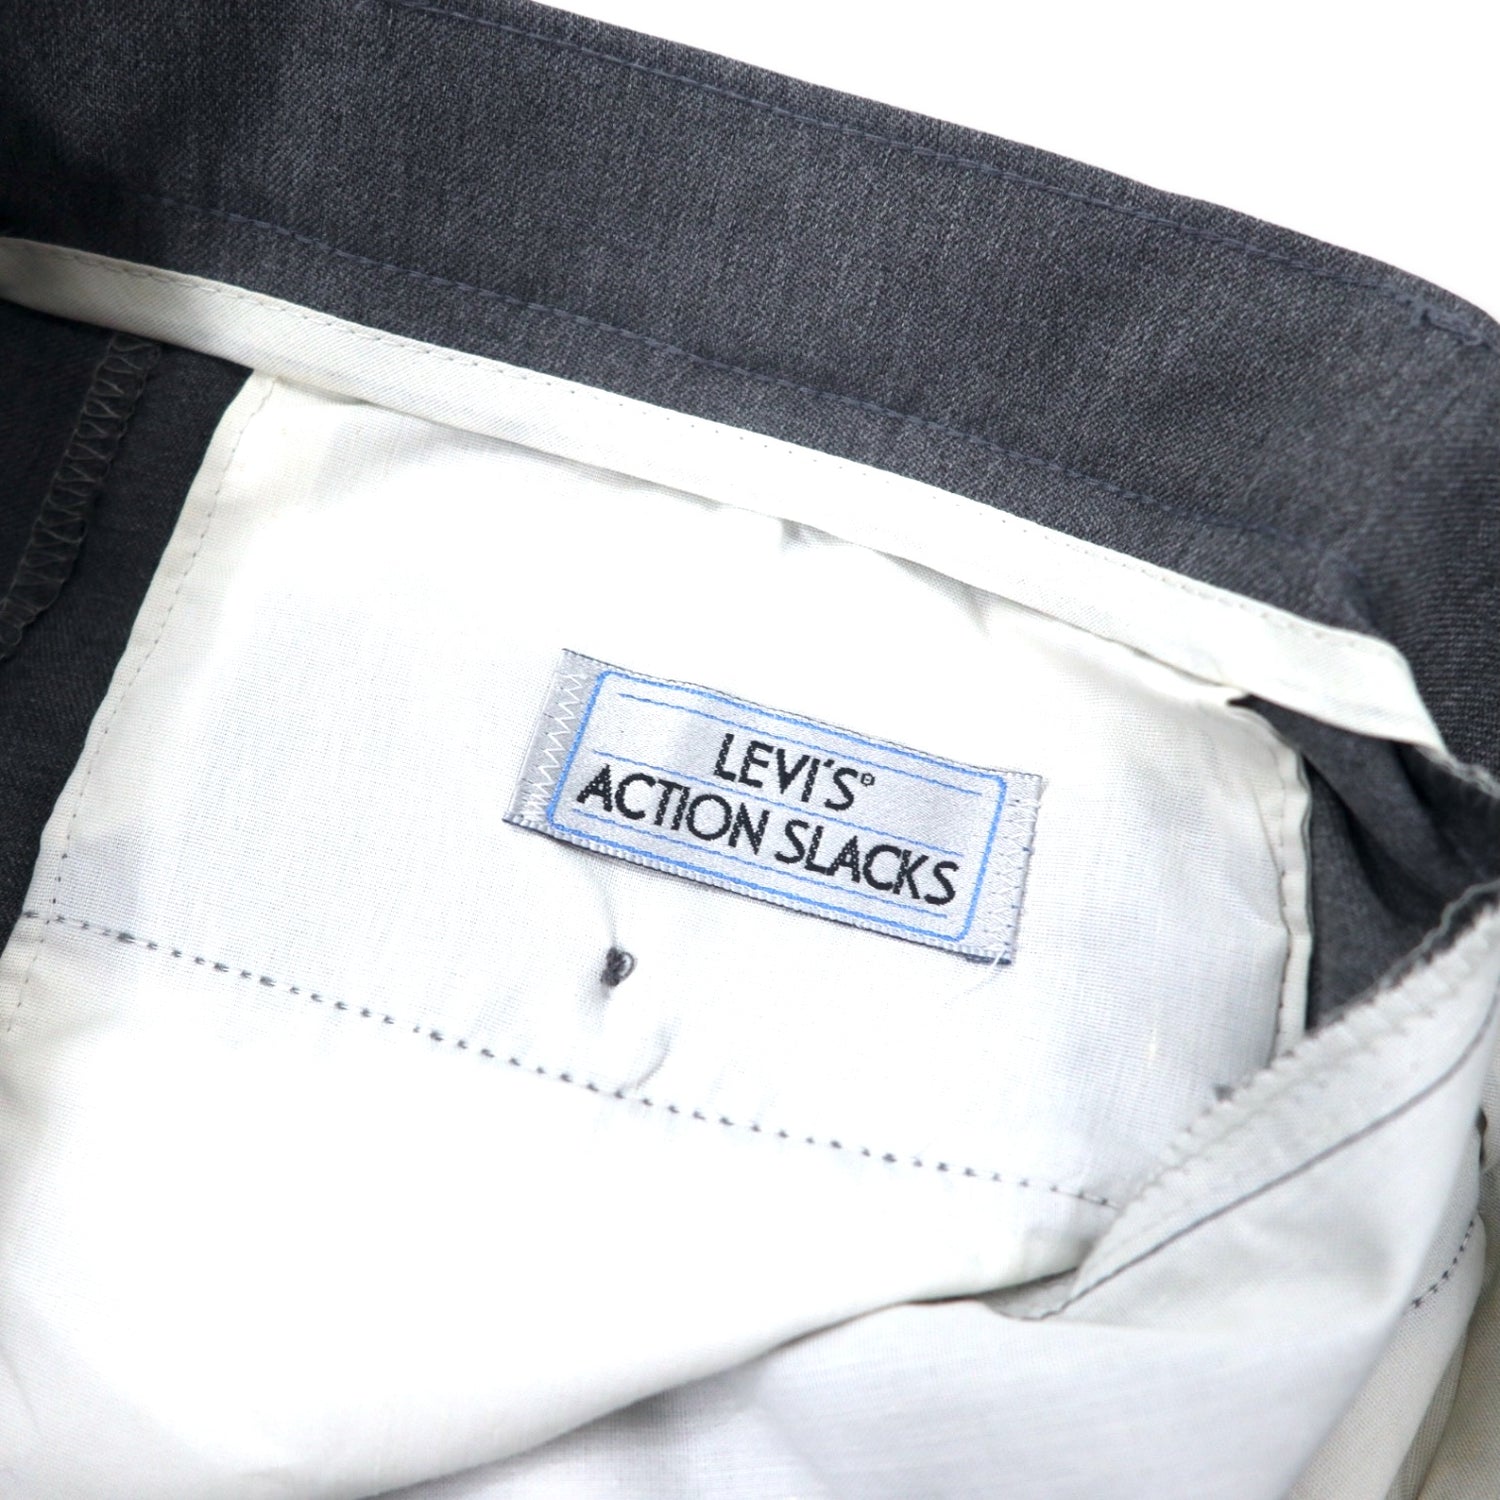 LEVI'S ACTION SLACKS USA Made 80's Action Slacks Pants 32 Gray 